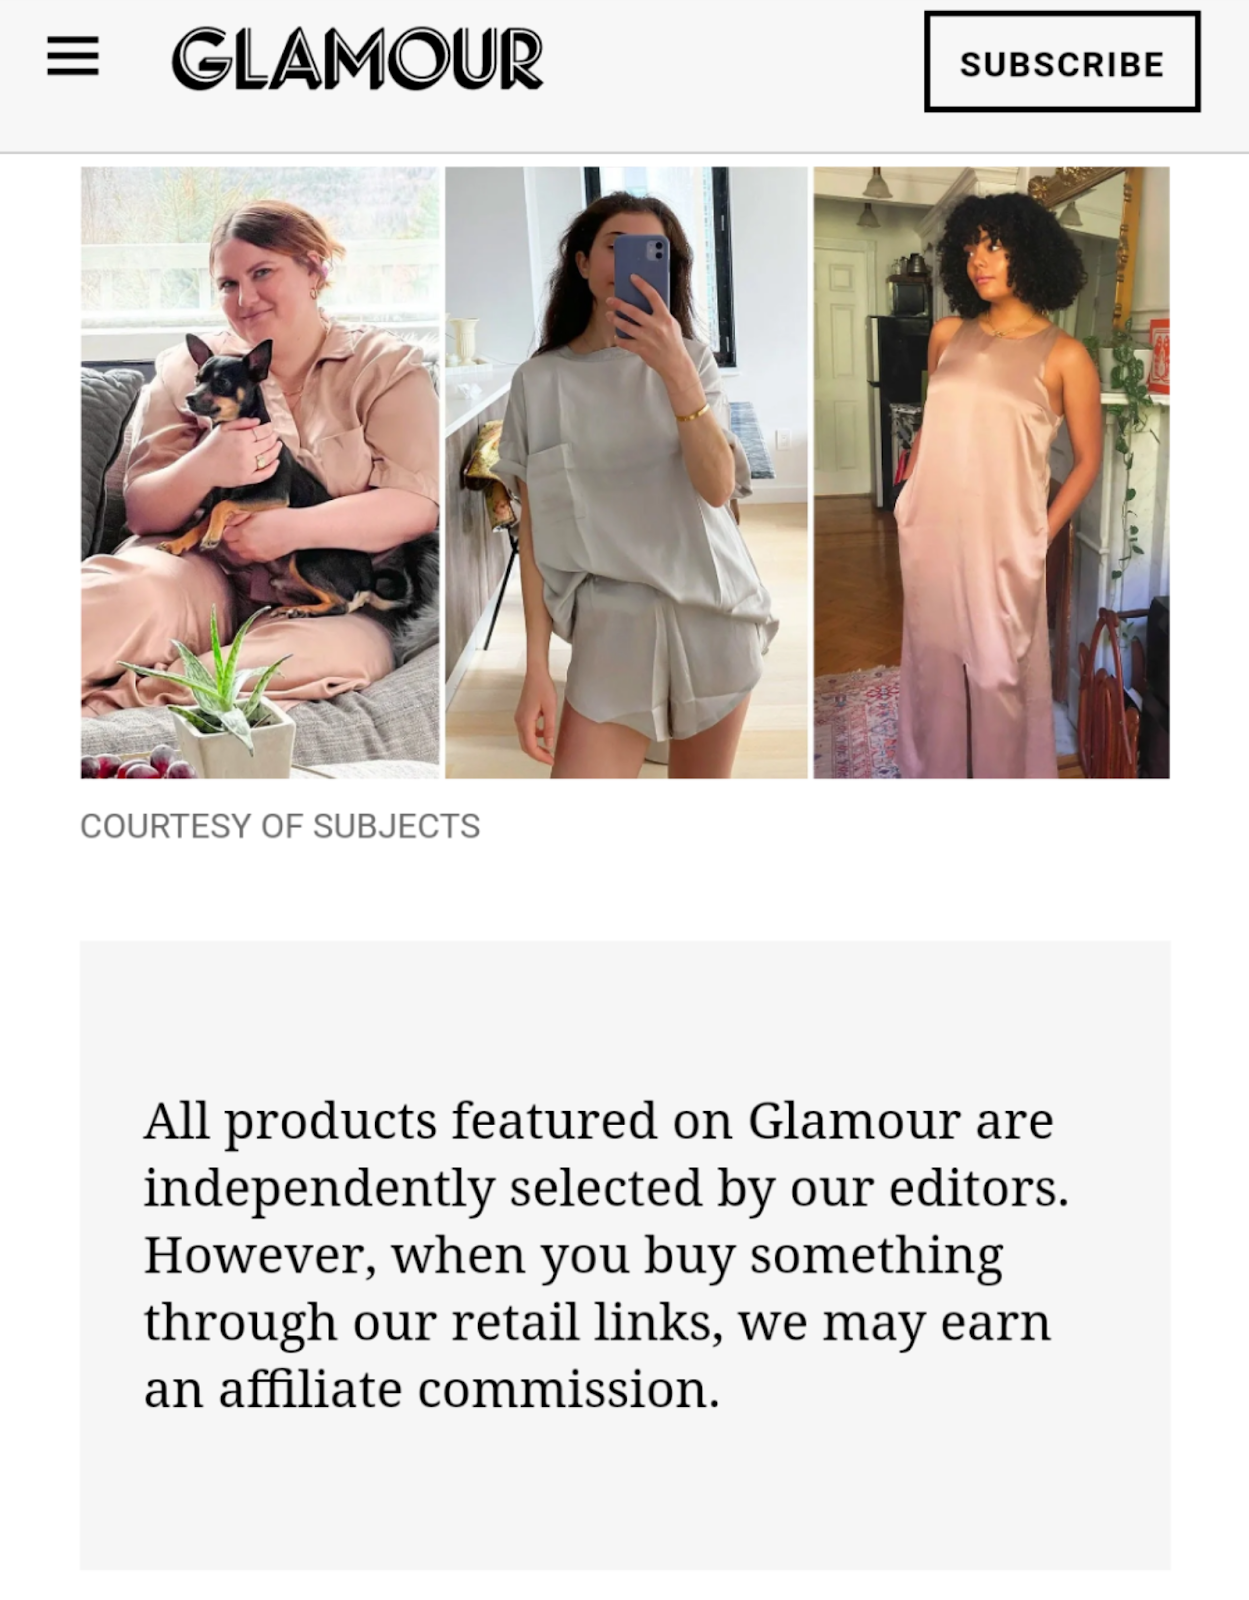 Glamour affiliate marketing disclosure